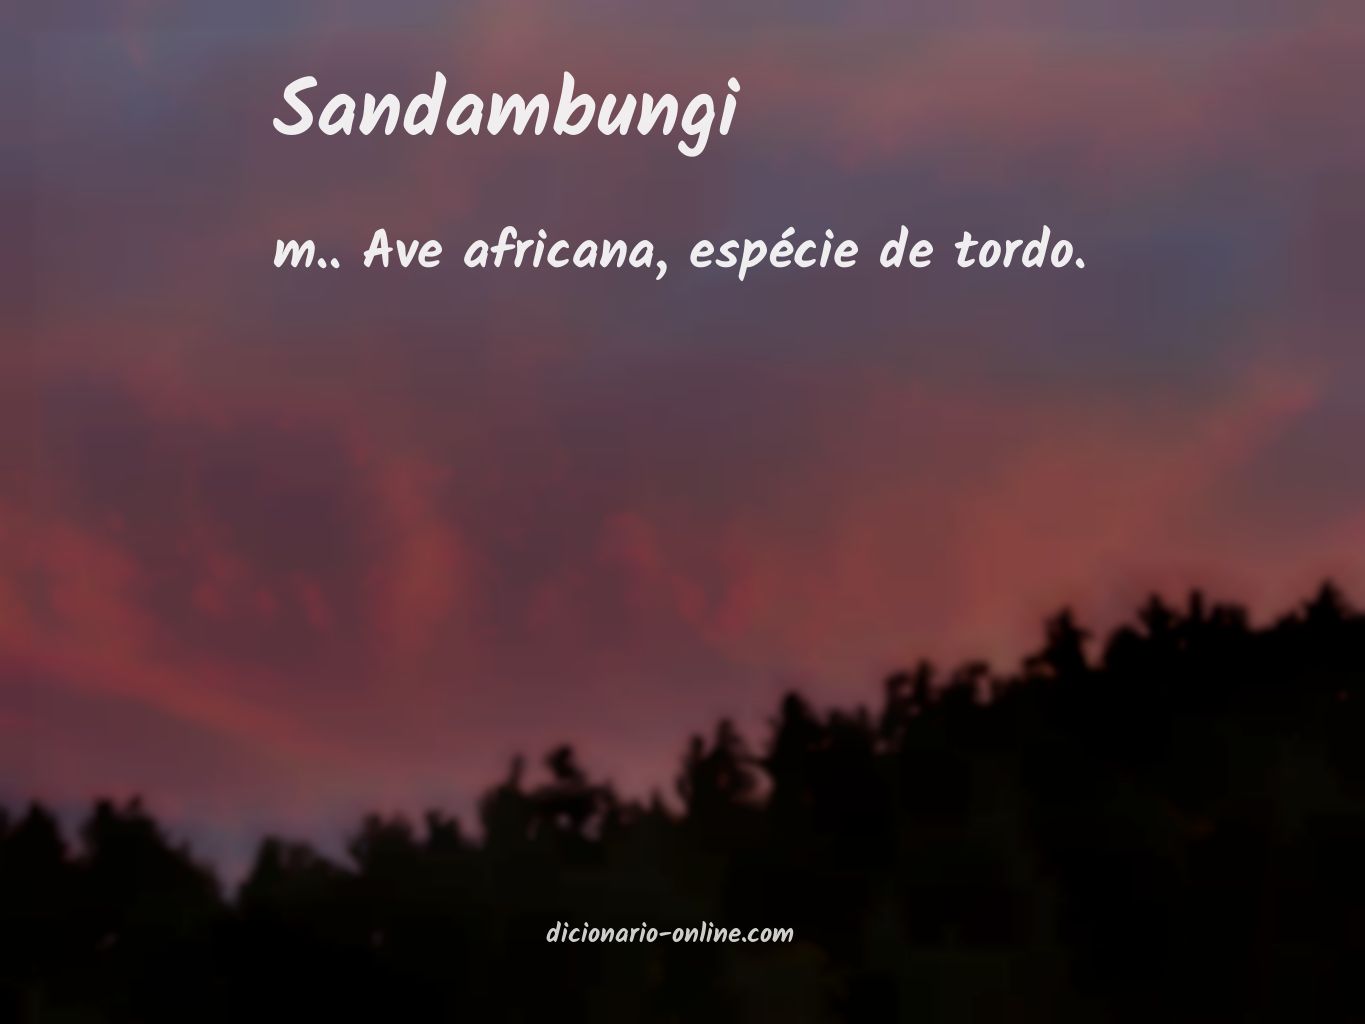 Significado de sandambungi